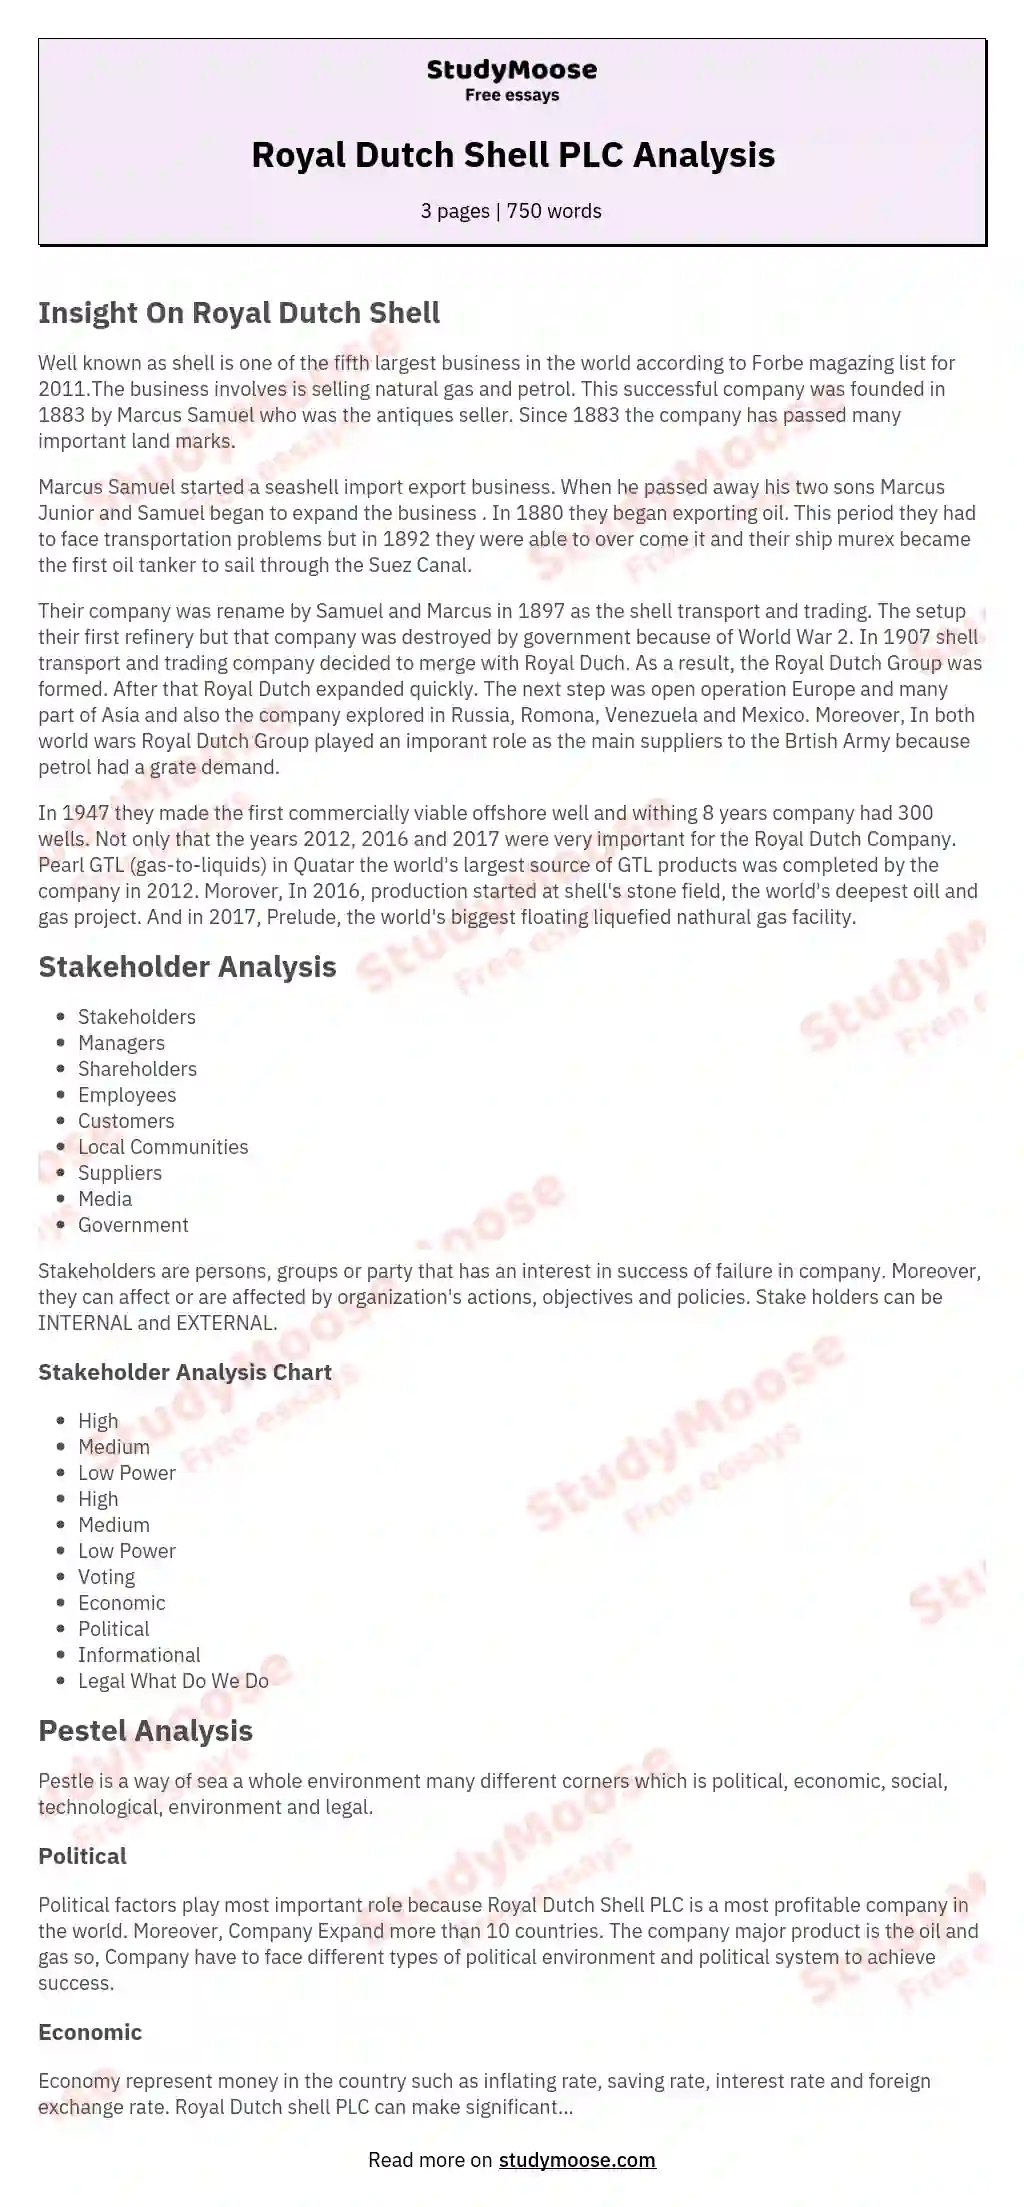 Royal Dutch Shell PLC Analysis essay